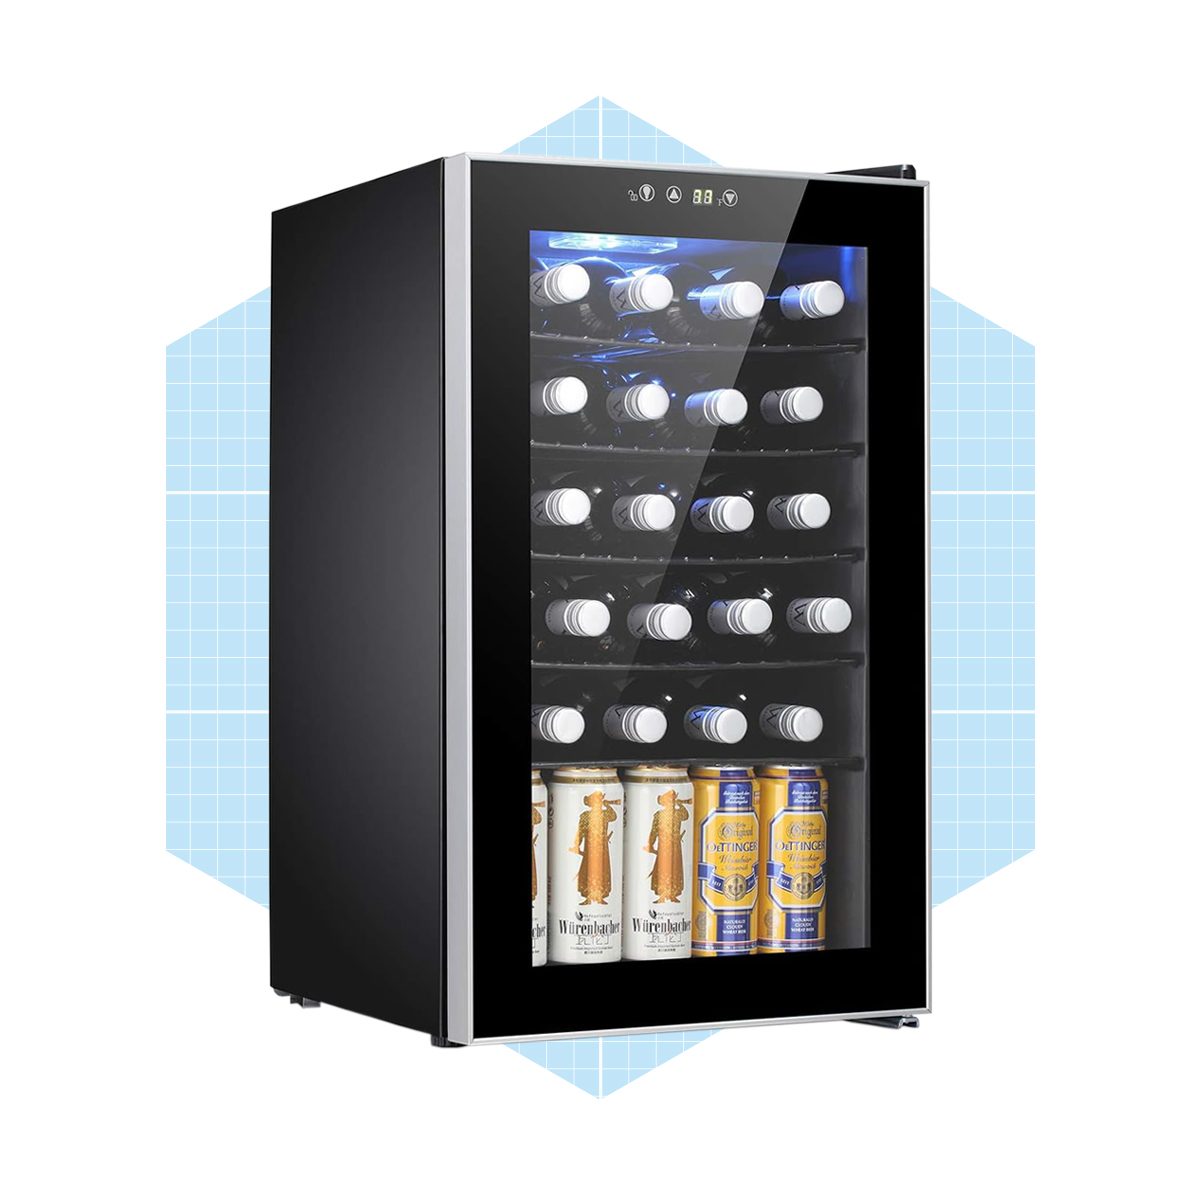 https://www.familyhandyman.com/wp-content/uploads/2019/02/Antartic-Star-Beverage-Refrigerator-Via-Merchant-Silo-DH-FHM-Best-Beer-Fridges.jpg?fit=700%2C700